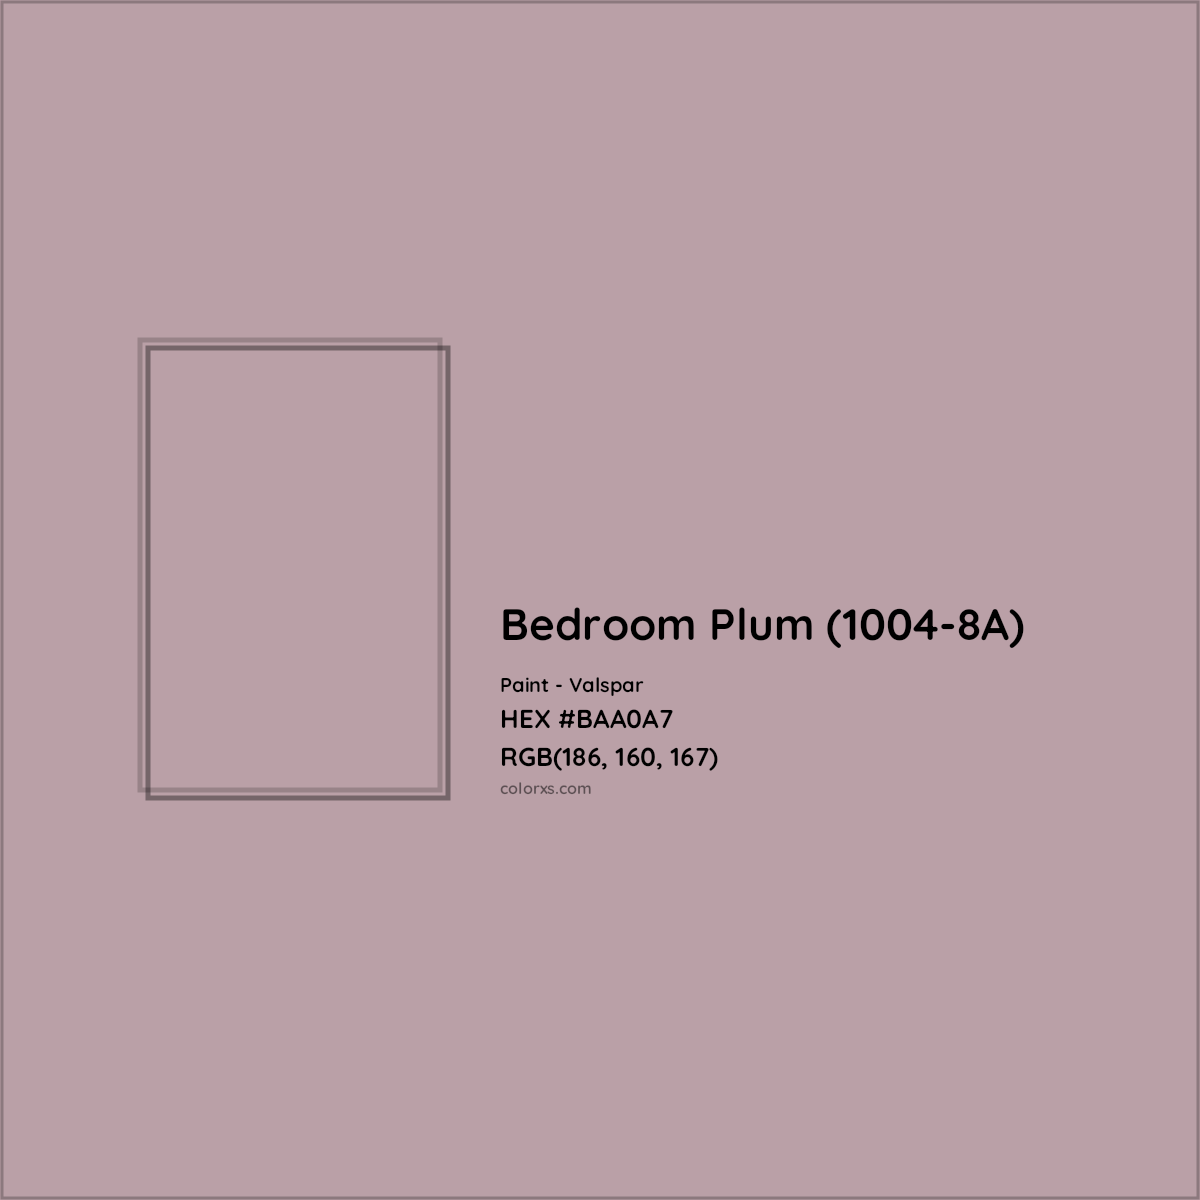 HEX #BAA0A7 Bedroom Plum (1004-8A) Paint Valspar - Color Code